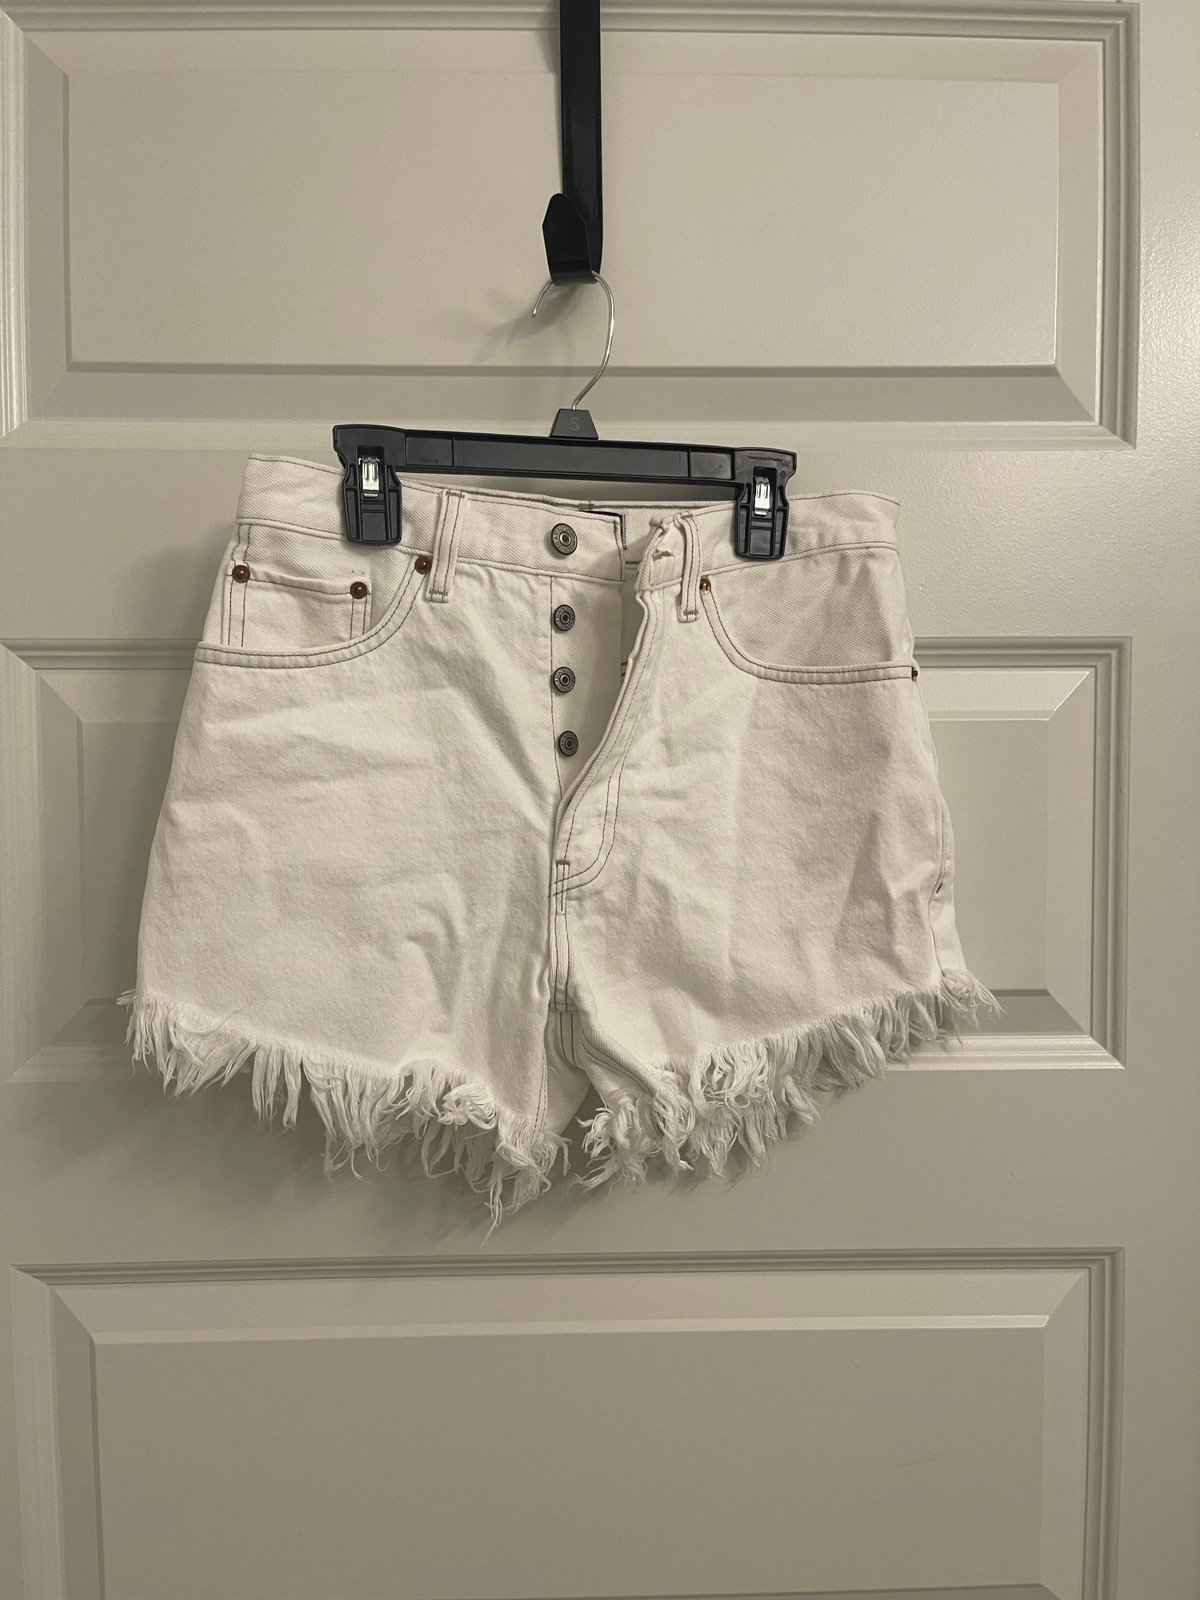 reasonable price abercrombie jean shorts Sz 0/25 pLP41CbJ9 Store Online